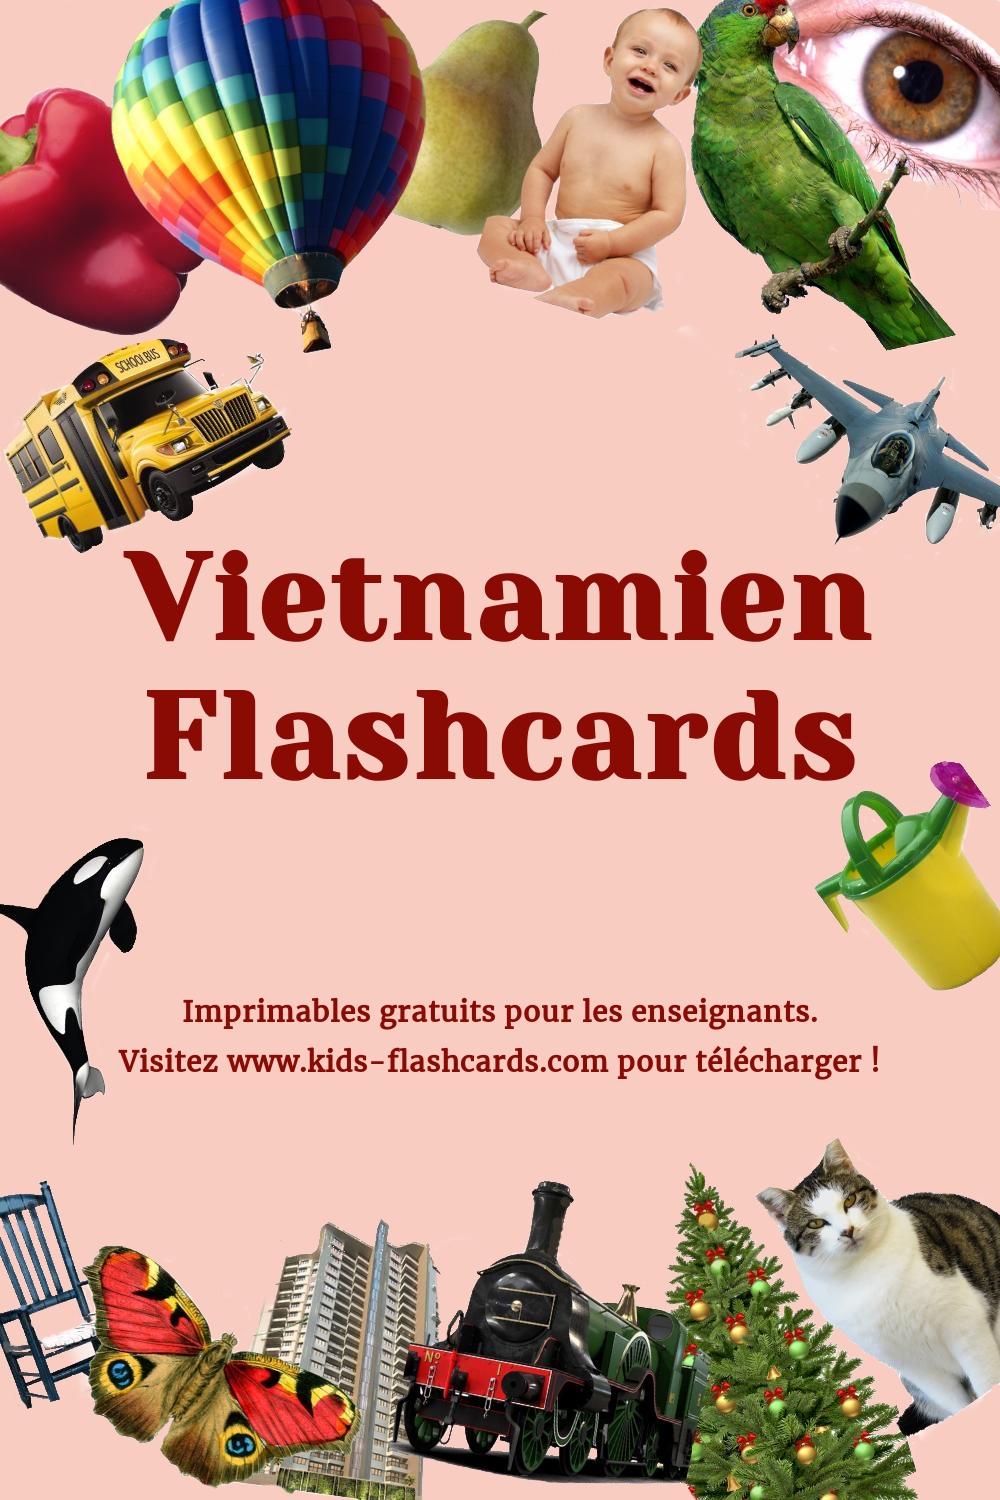 Imprimables gratuits en Vietnamien